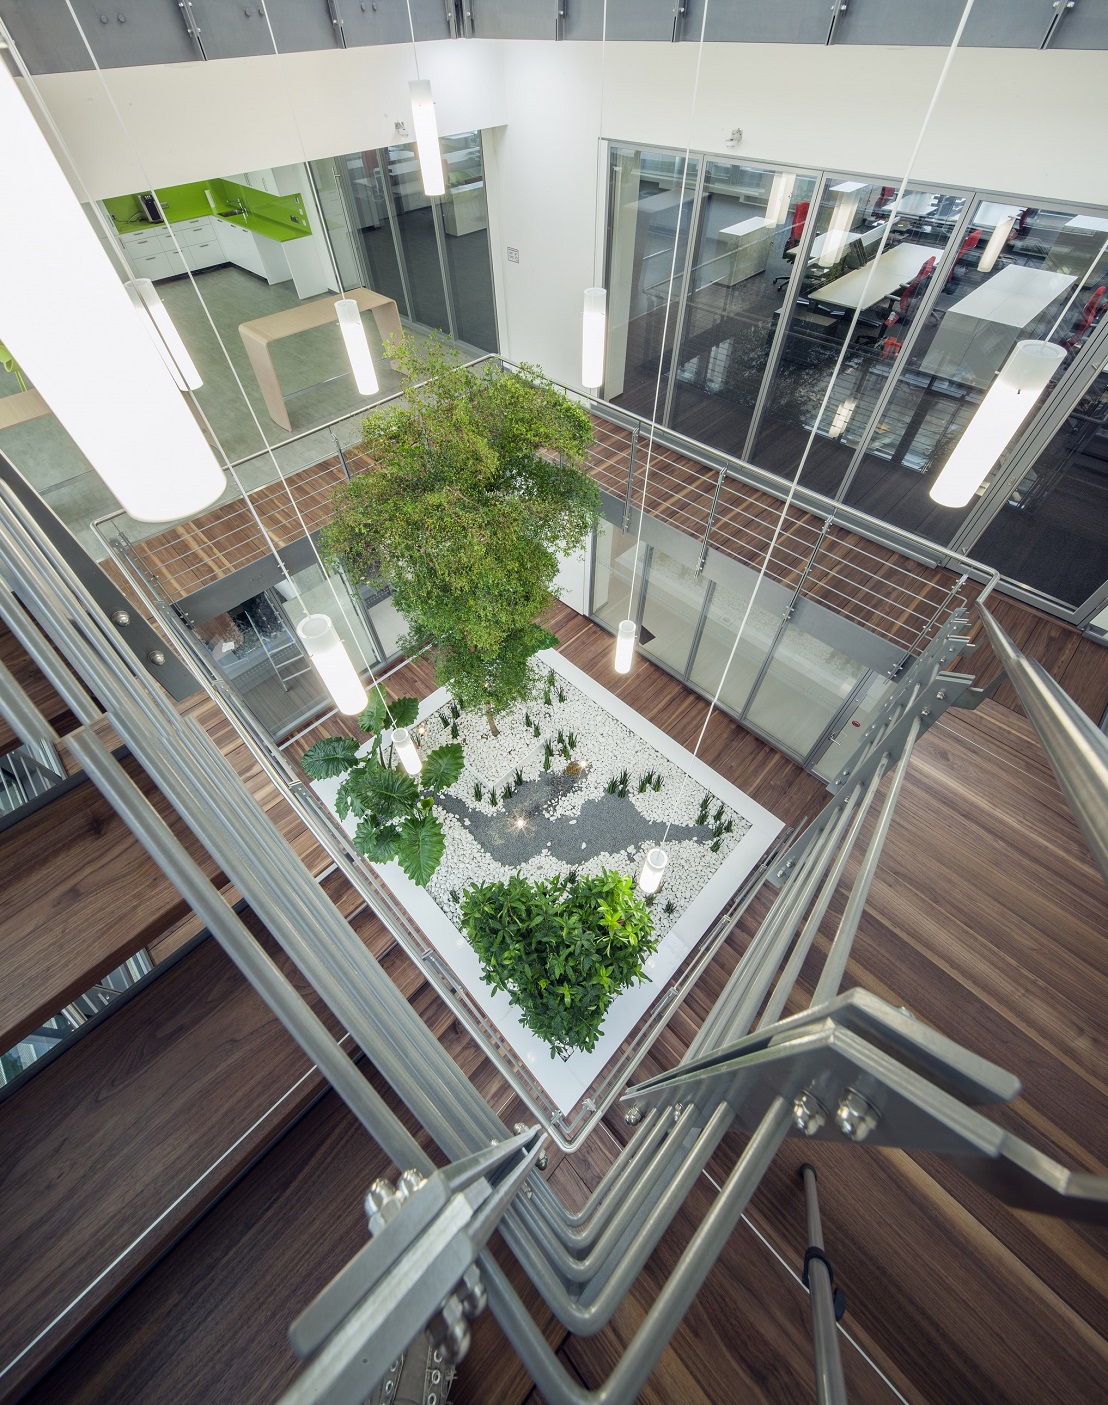 Big tropical tree interior lobby and atrium - Norway, Finland, Sweden, Denmark - Europe buy online